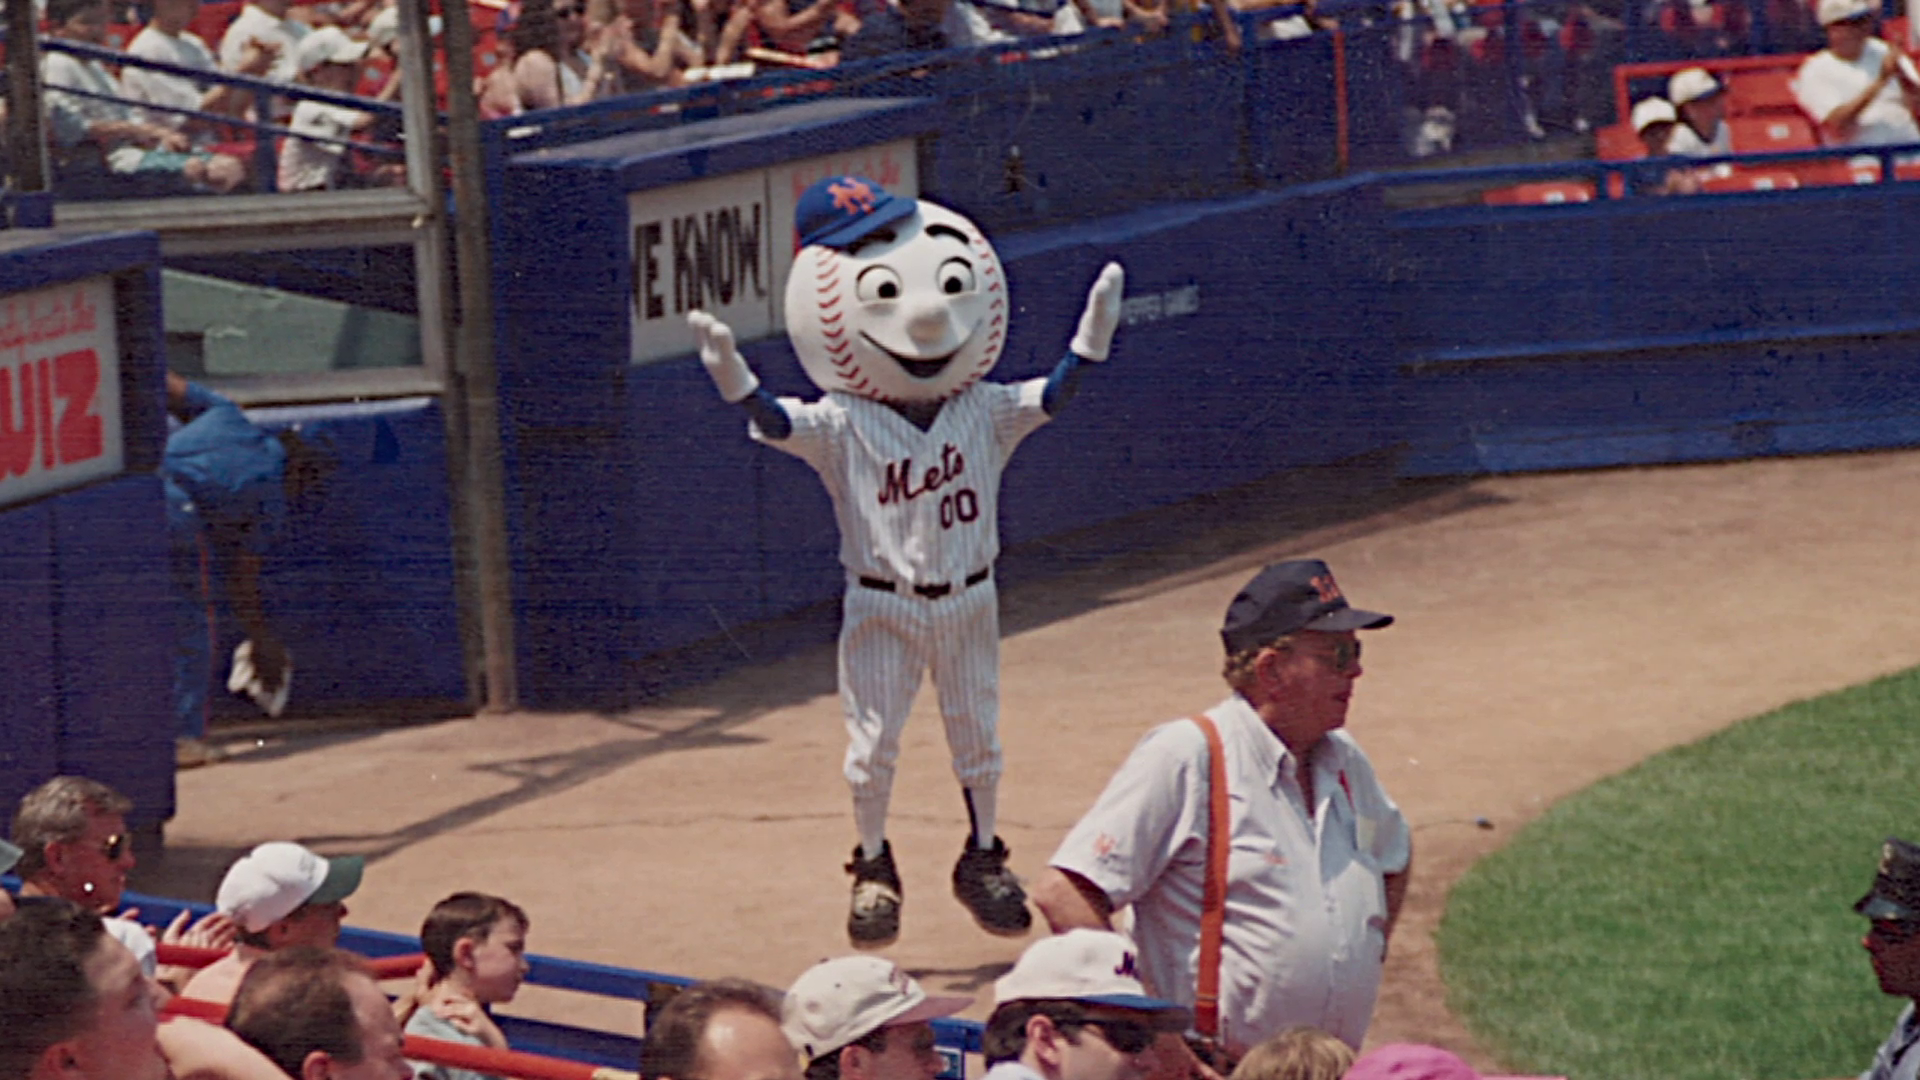 MetroFocus, Yes, It's Hot In Here: Former New York Mets Mascot AJ Mass